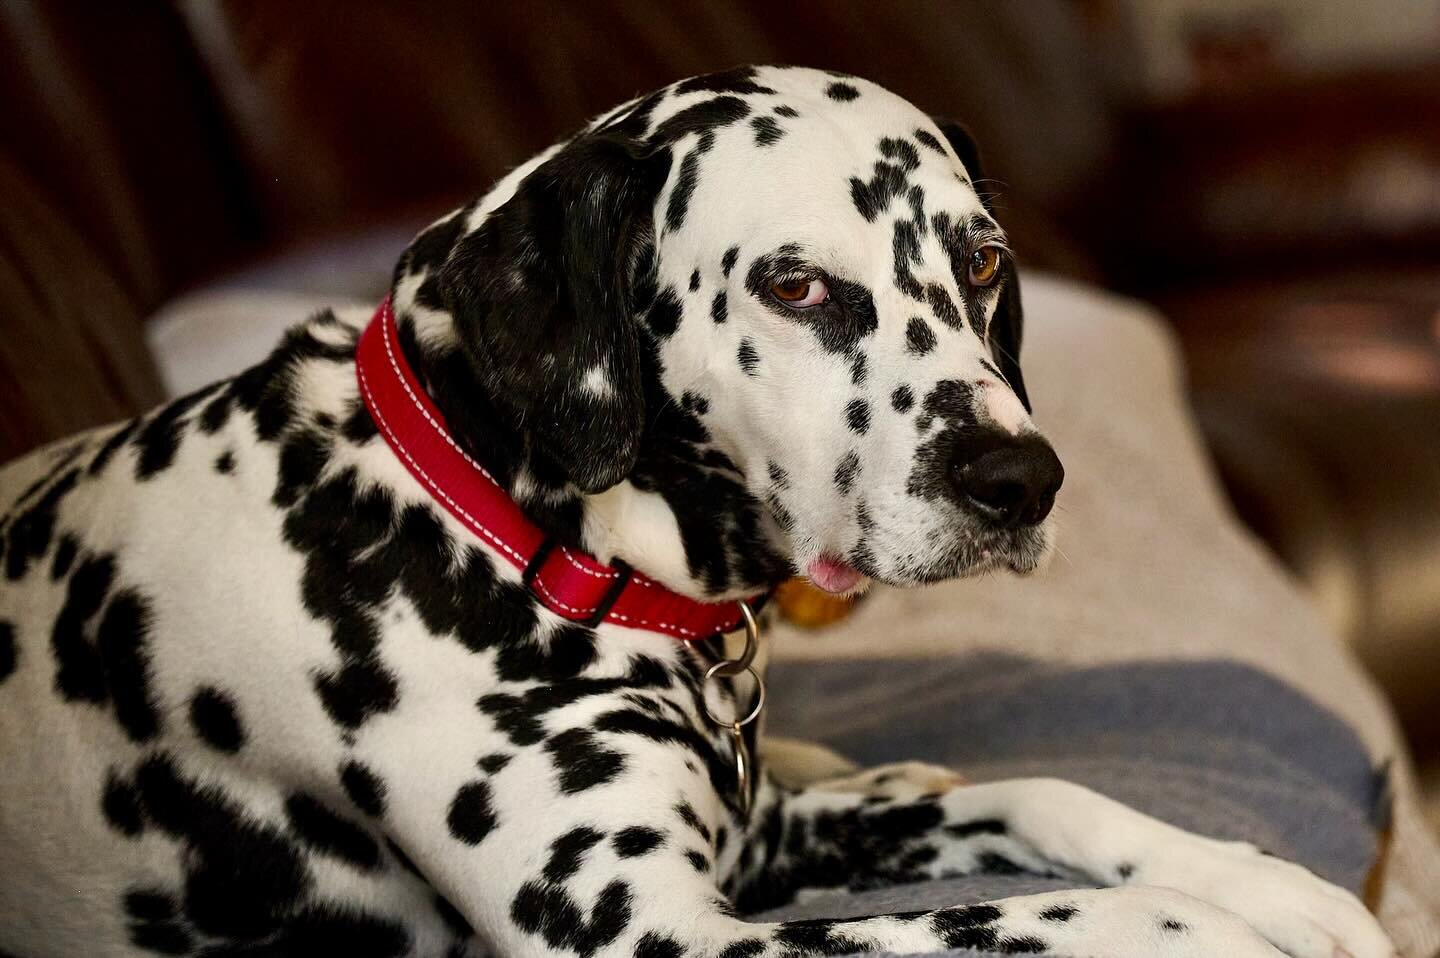 Ziggy 🥰 #dalmatian #dalmatians #dog #dogphotography #petphotography #aywmc #aywmcjune2020